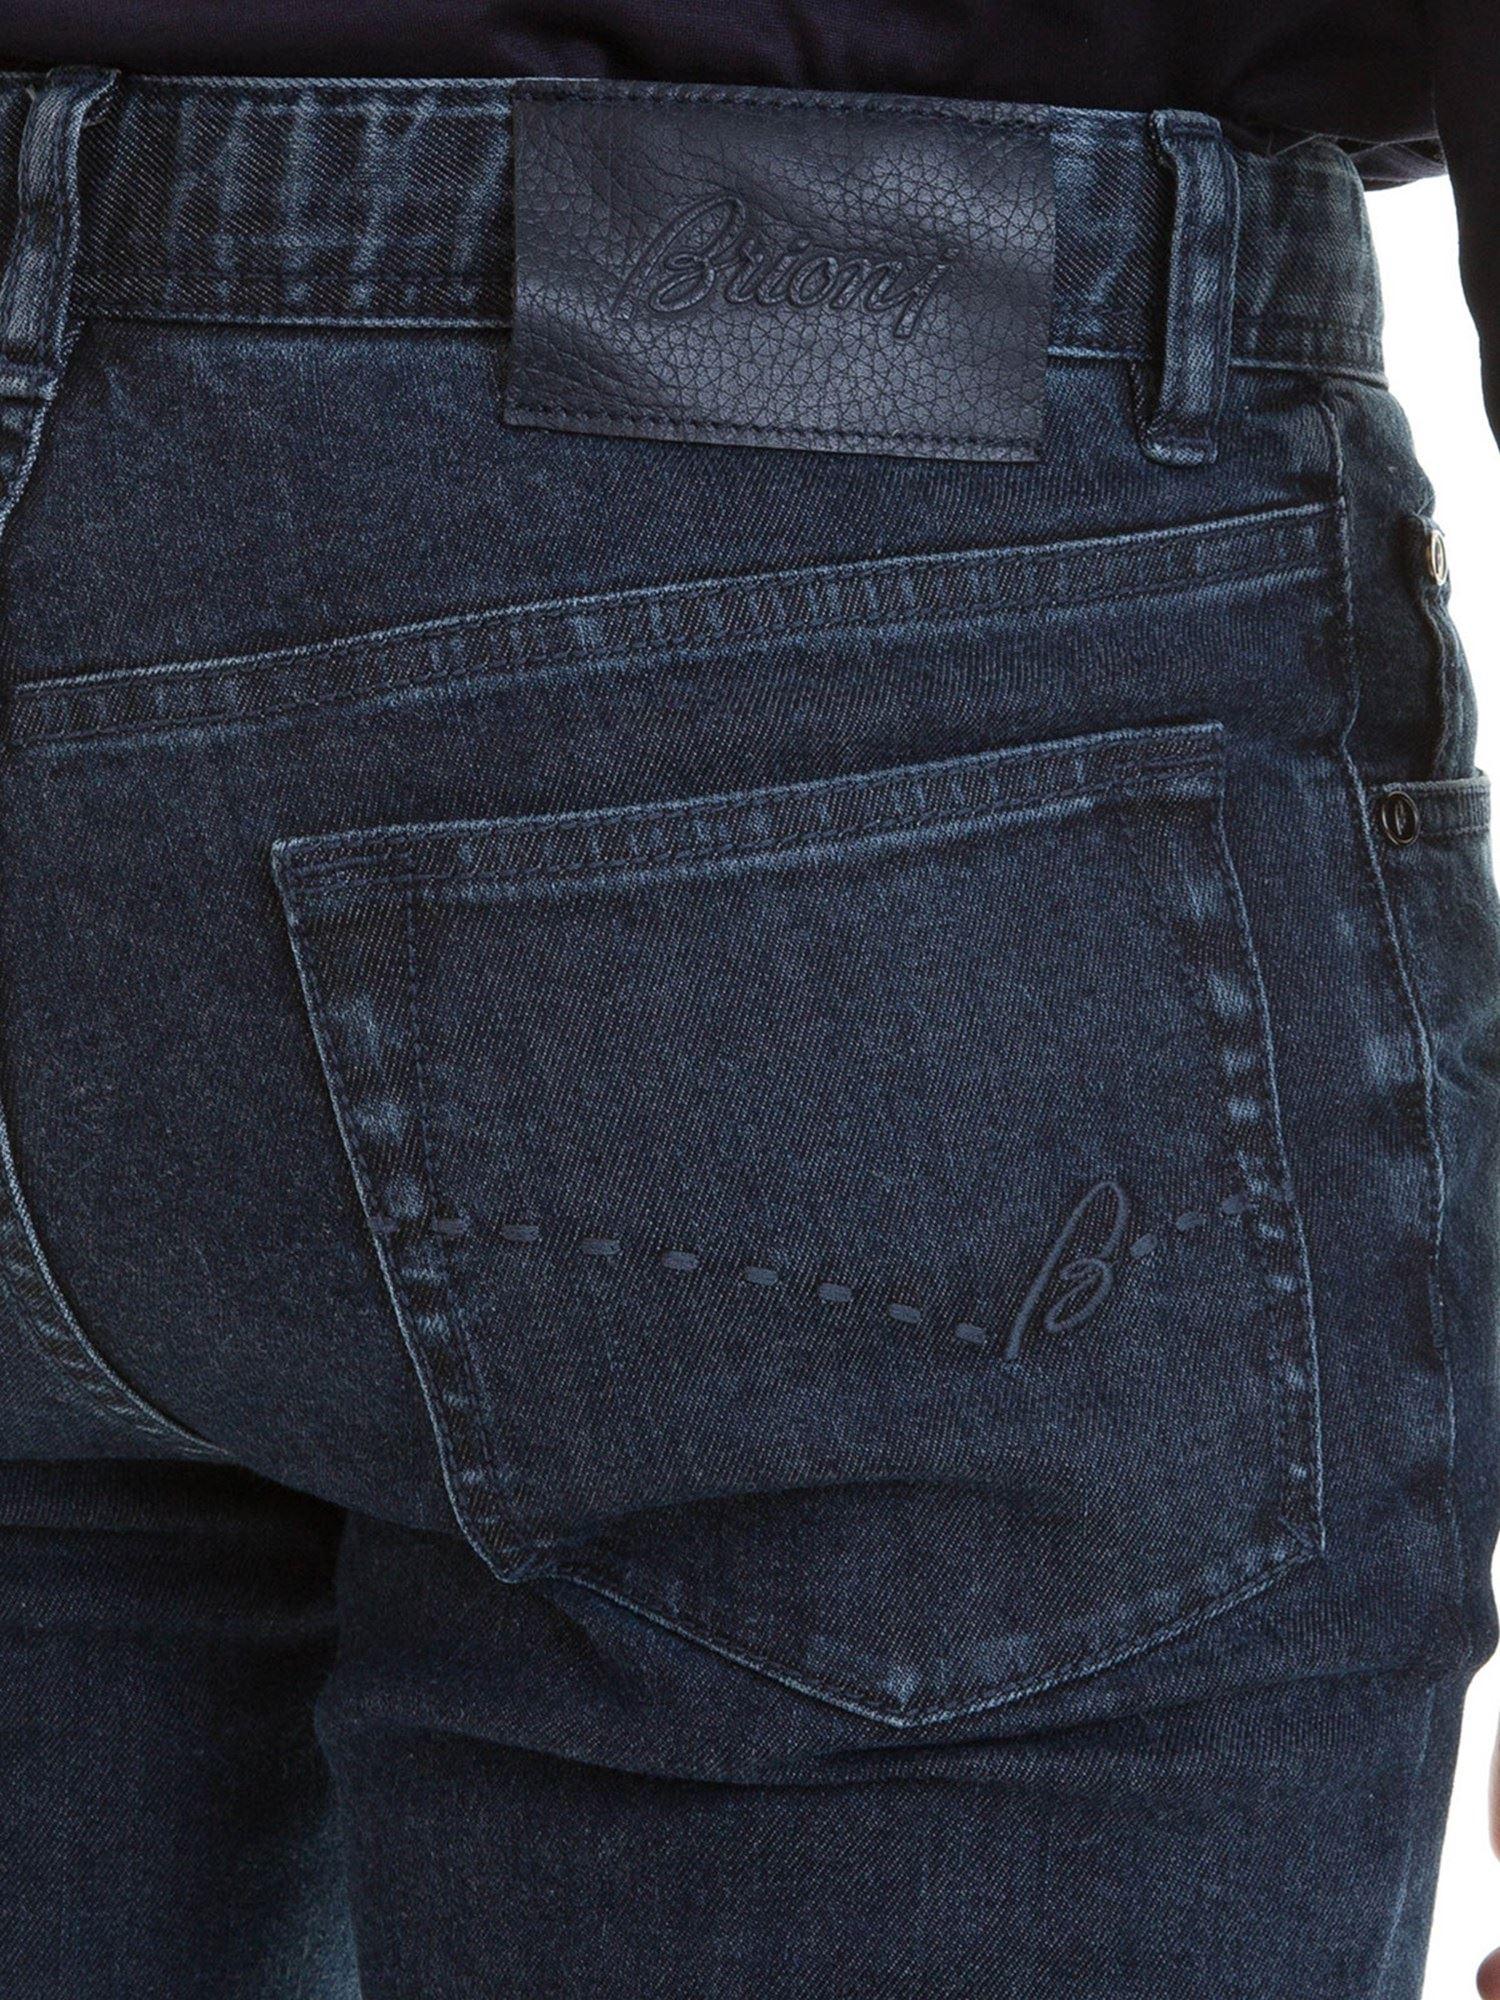 Brioni Denim Livigno Bootcut Jeans in Blue for Men - Lyst